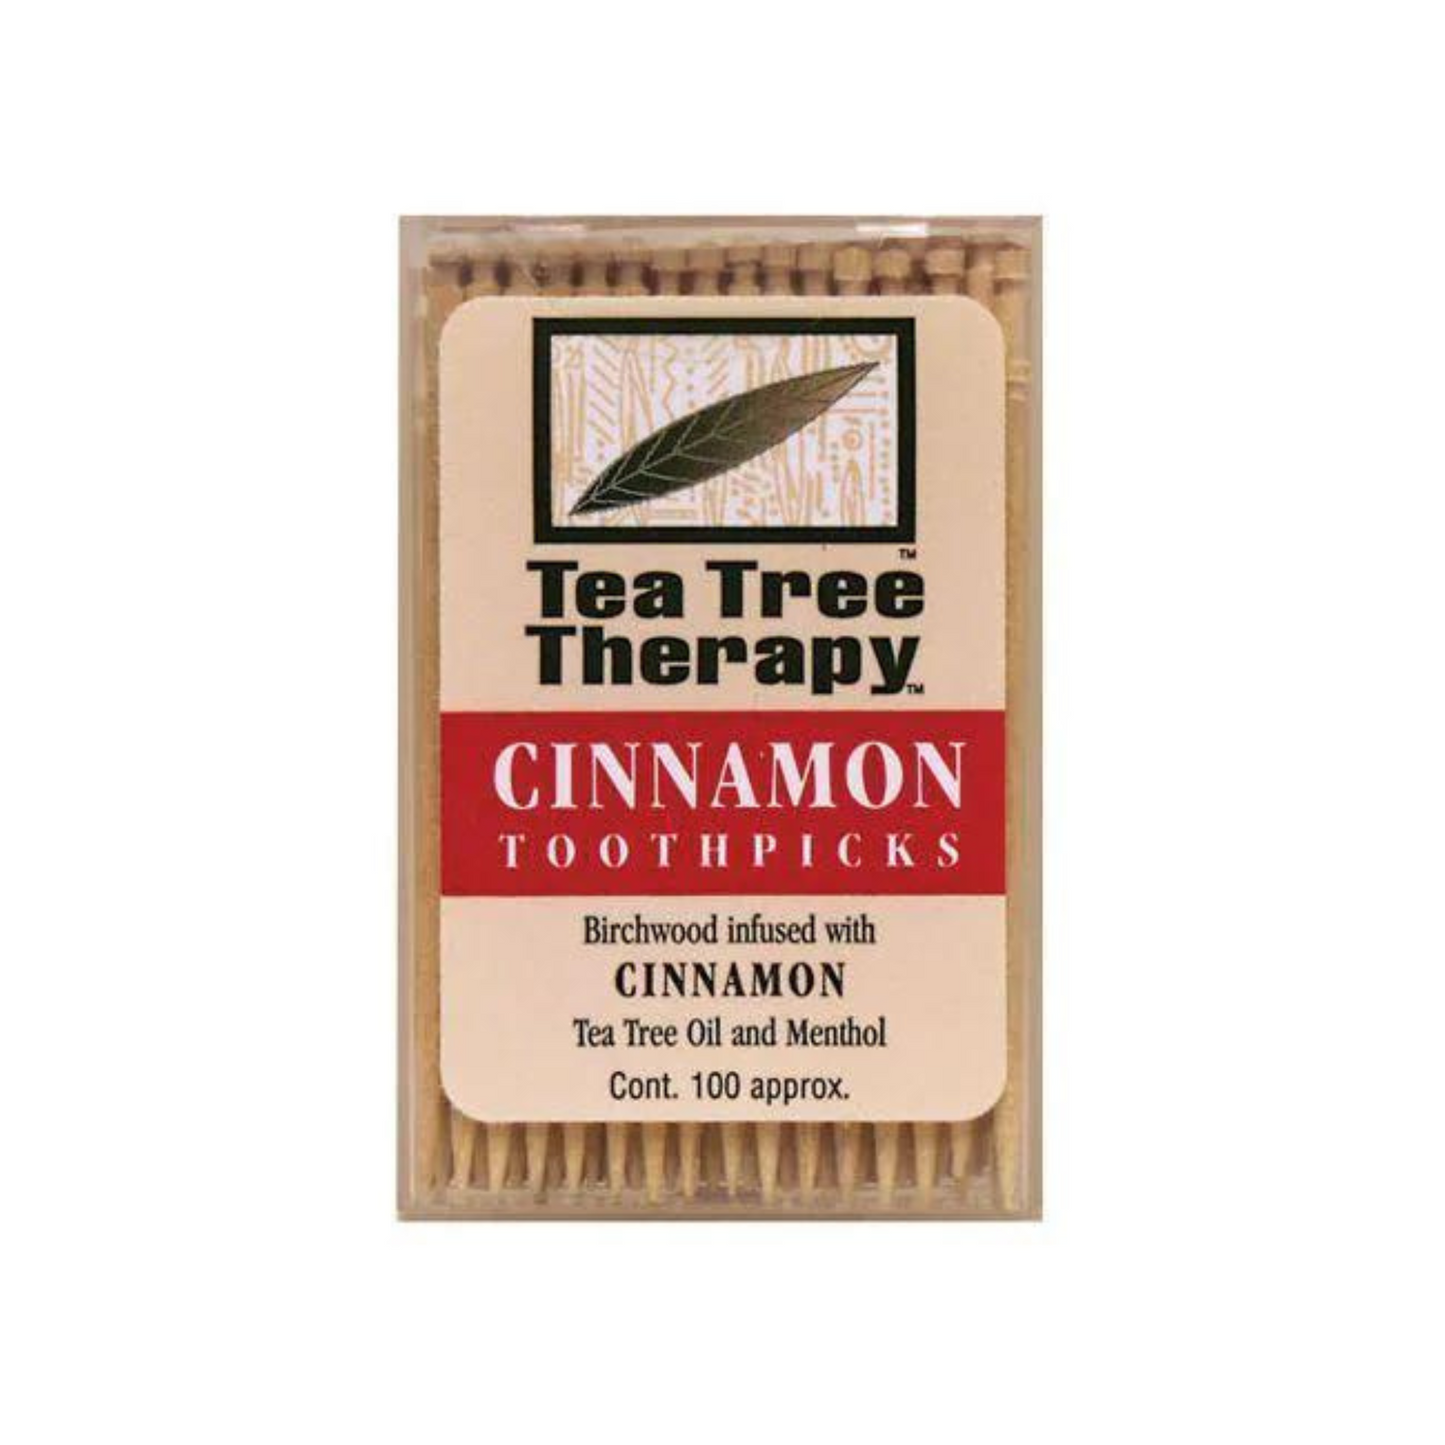 Primary Image of Tea Tree Therapy Cinnamon Toothpicks